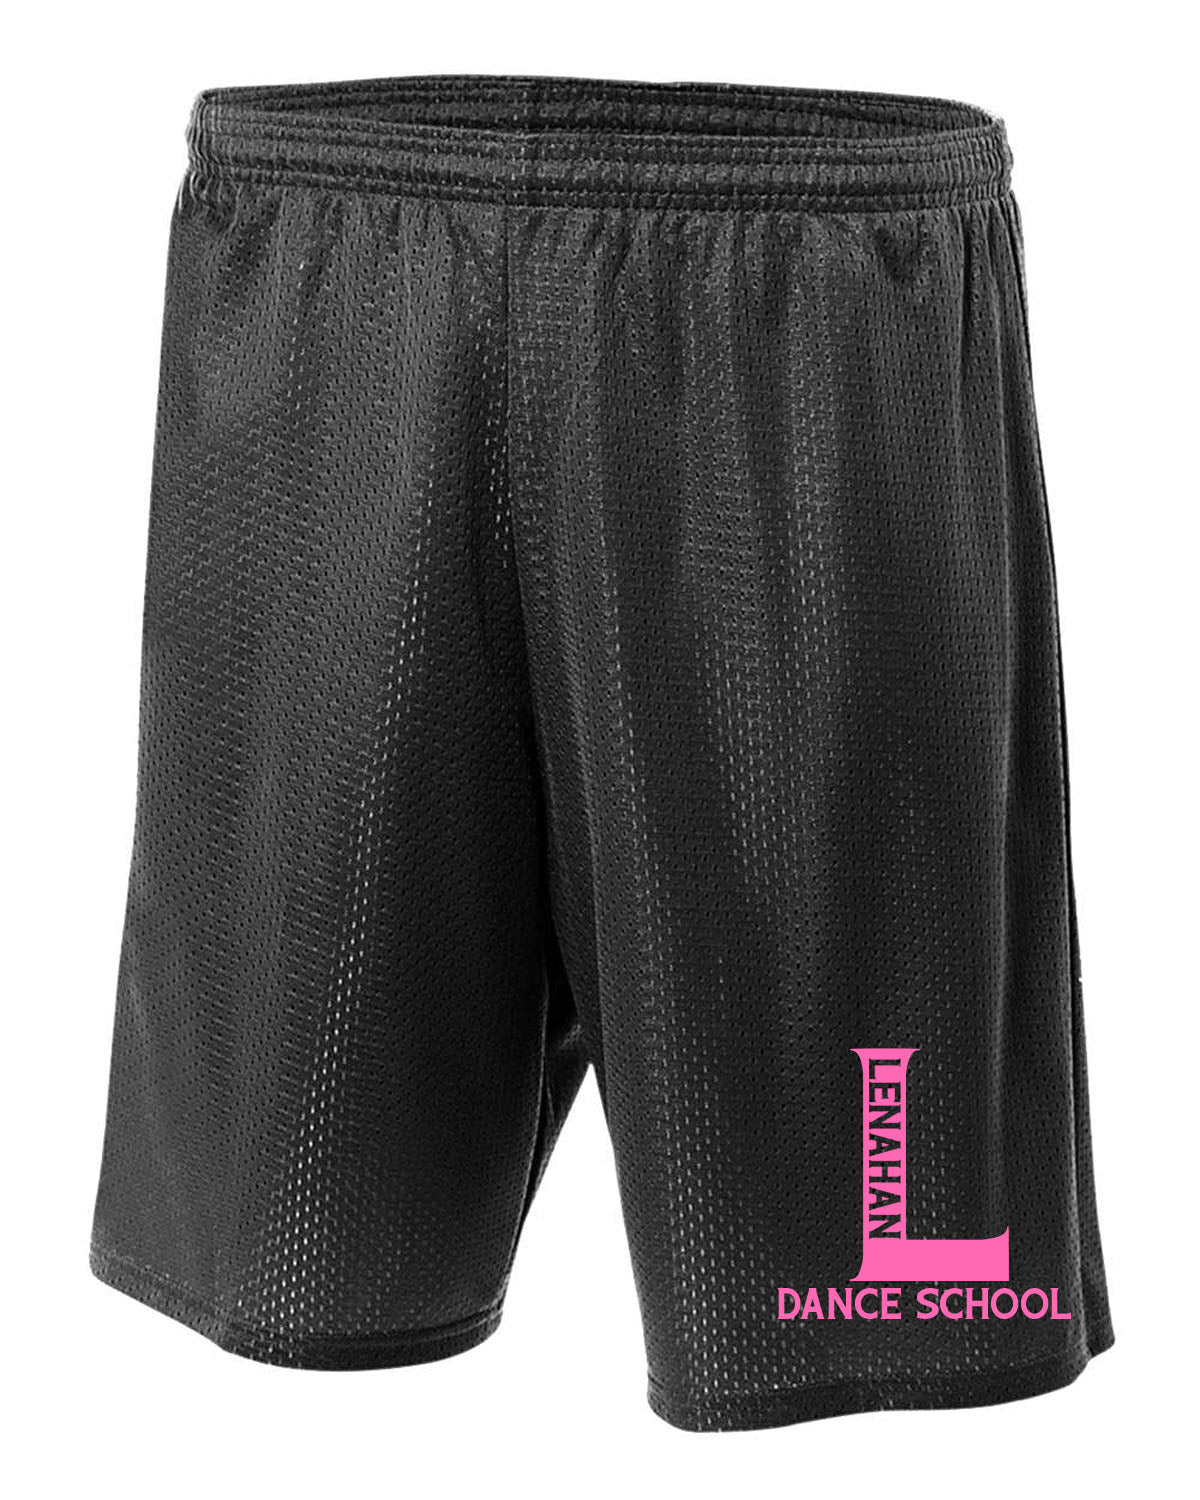 Lenahan Dance Design 1 Mesh Shorts